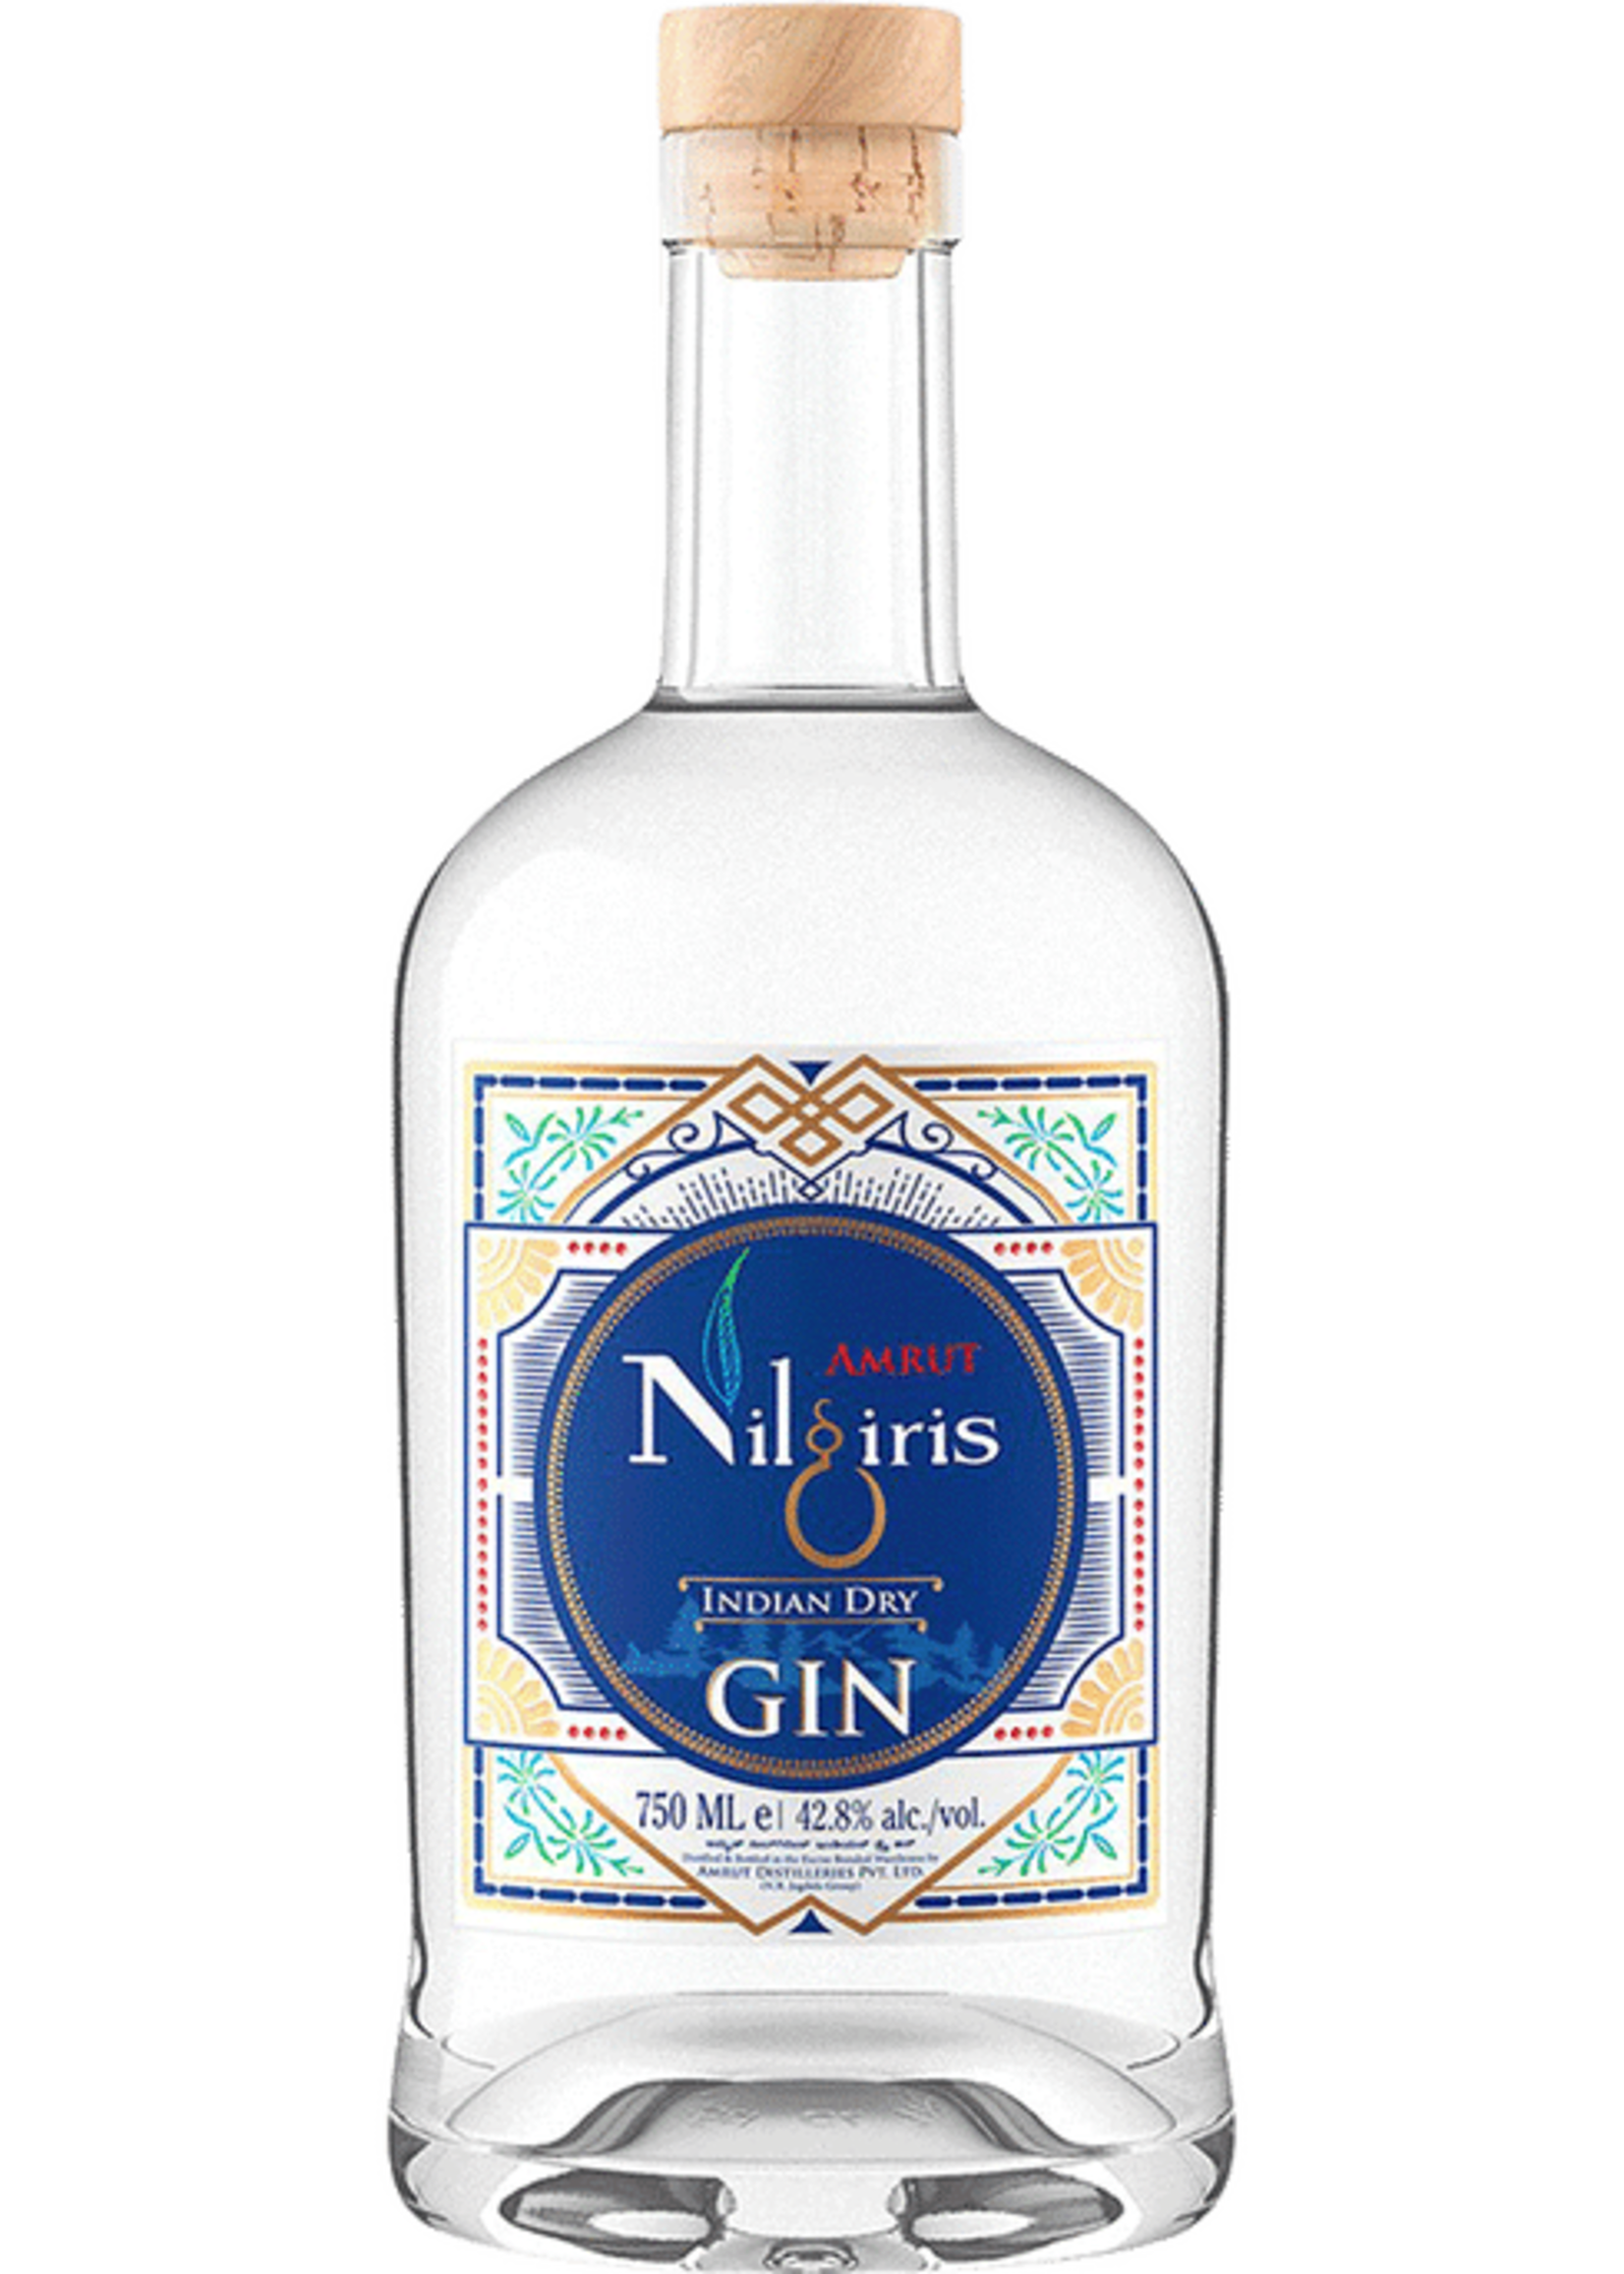 Amrut Nilgiris Indian Dry Gin 85.60Proof 750ml